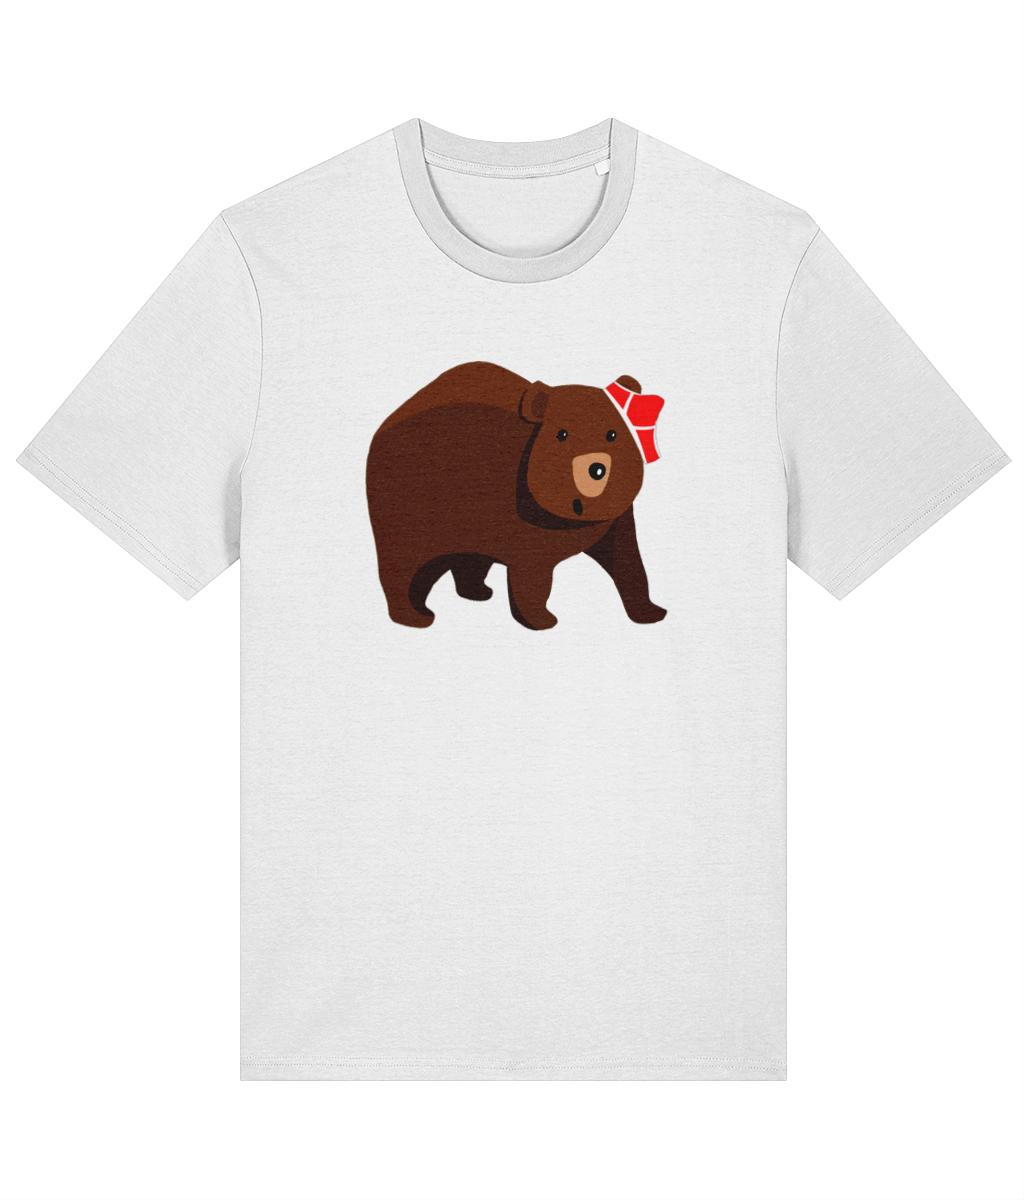 Bear in Briefs T-Shirt